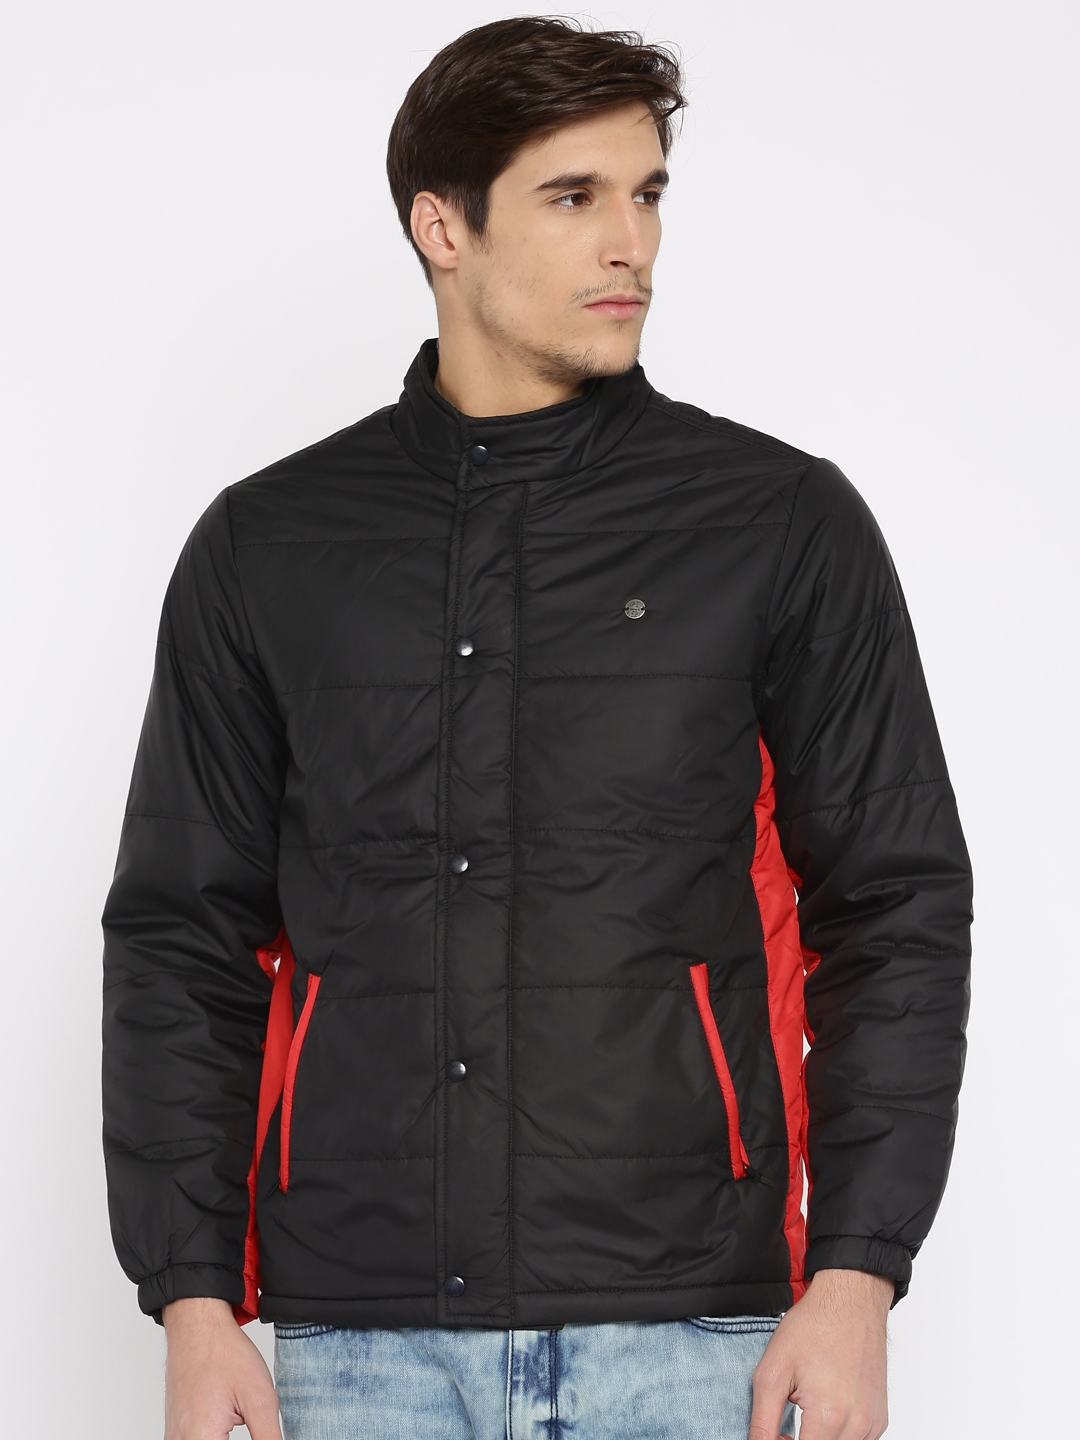 Buy Peter England Black Padded Jacket - Jackets for Men 606867 | Myntra